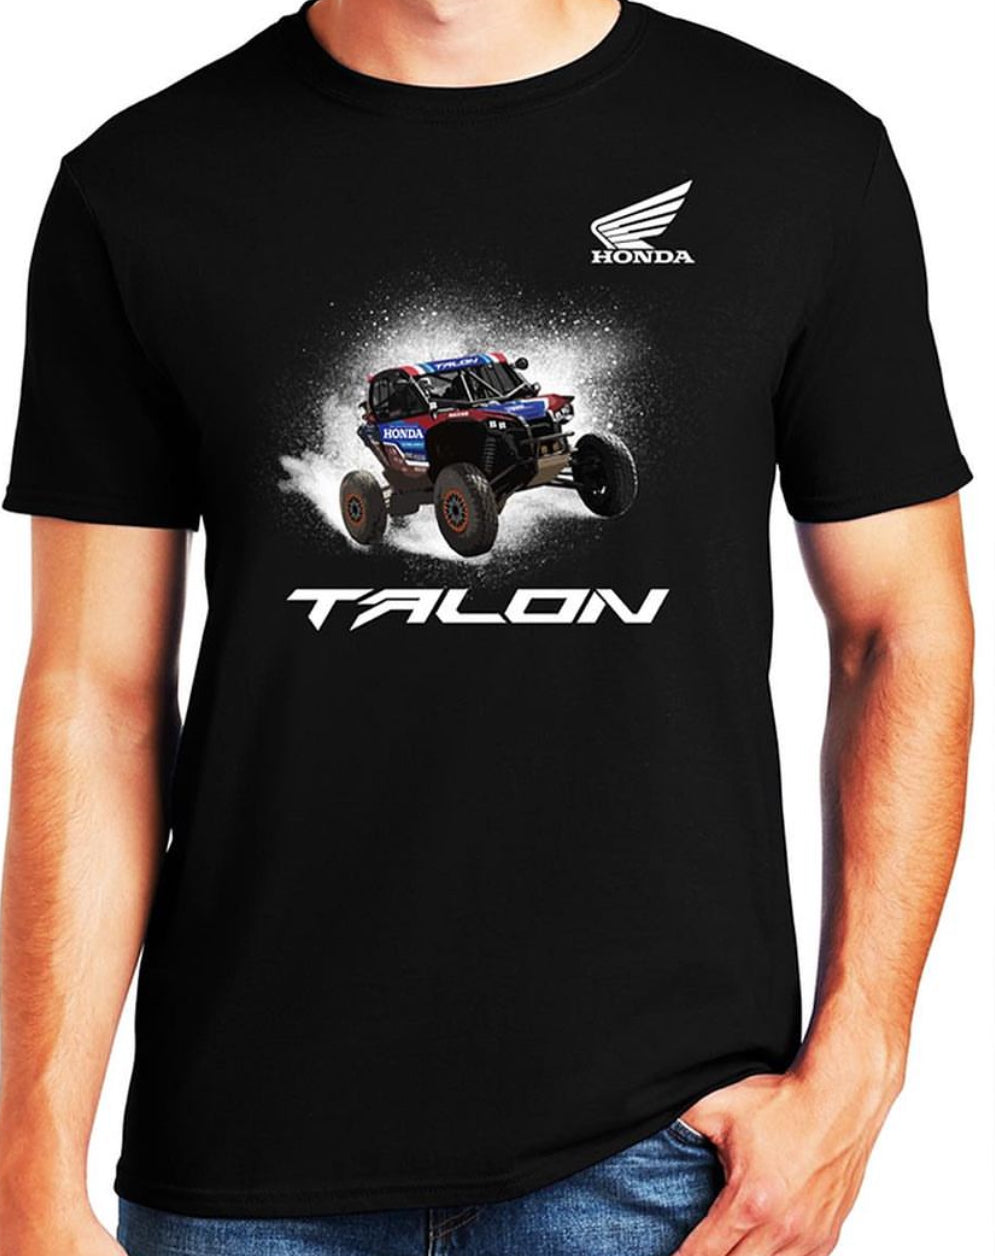 Limited Edition Talon Racing Tee